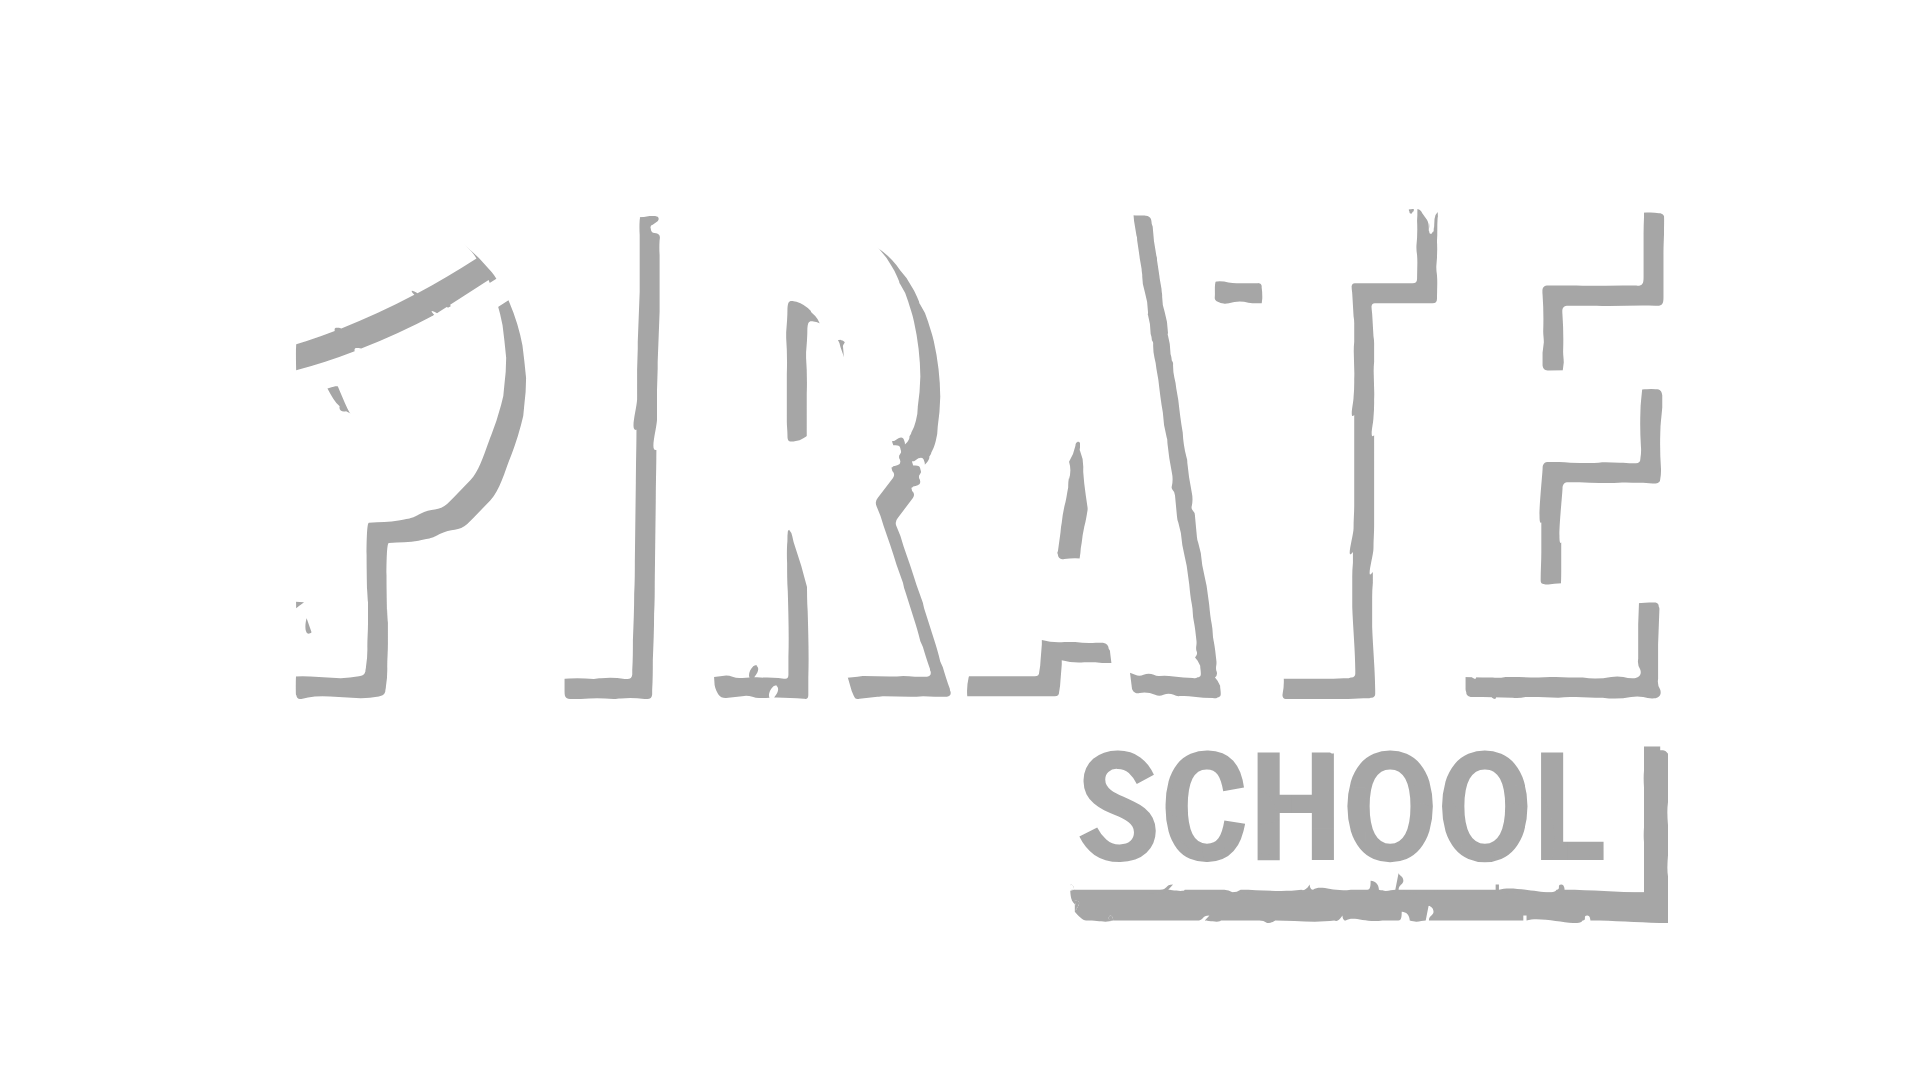 pirate school visit